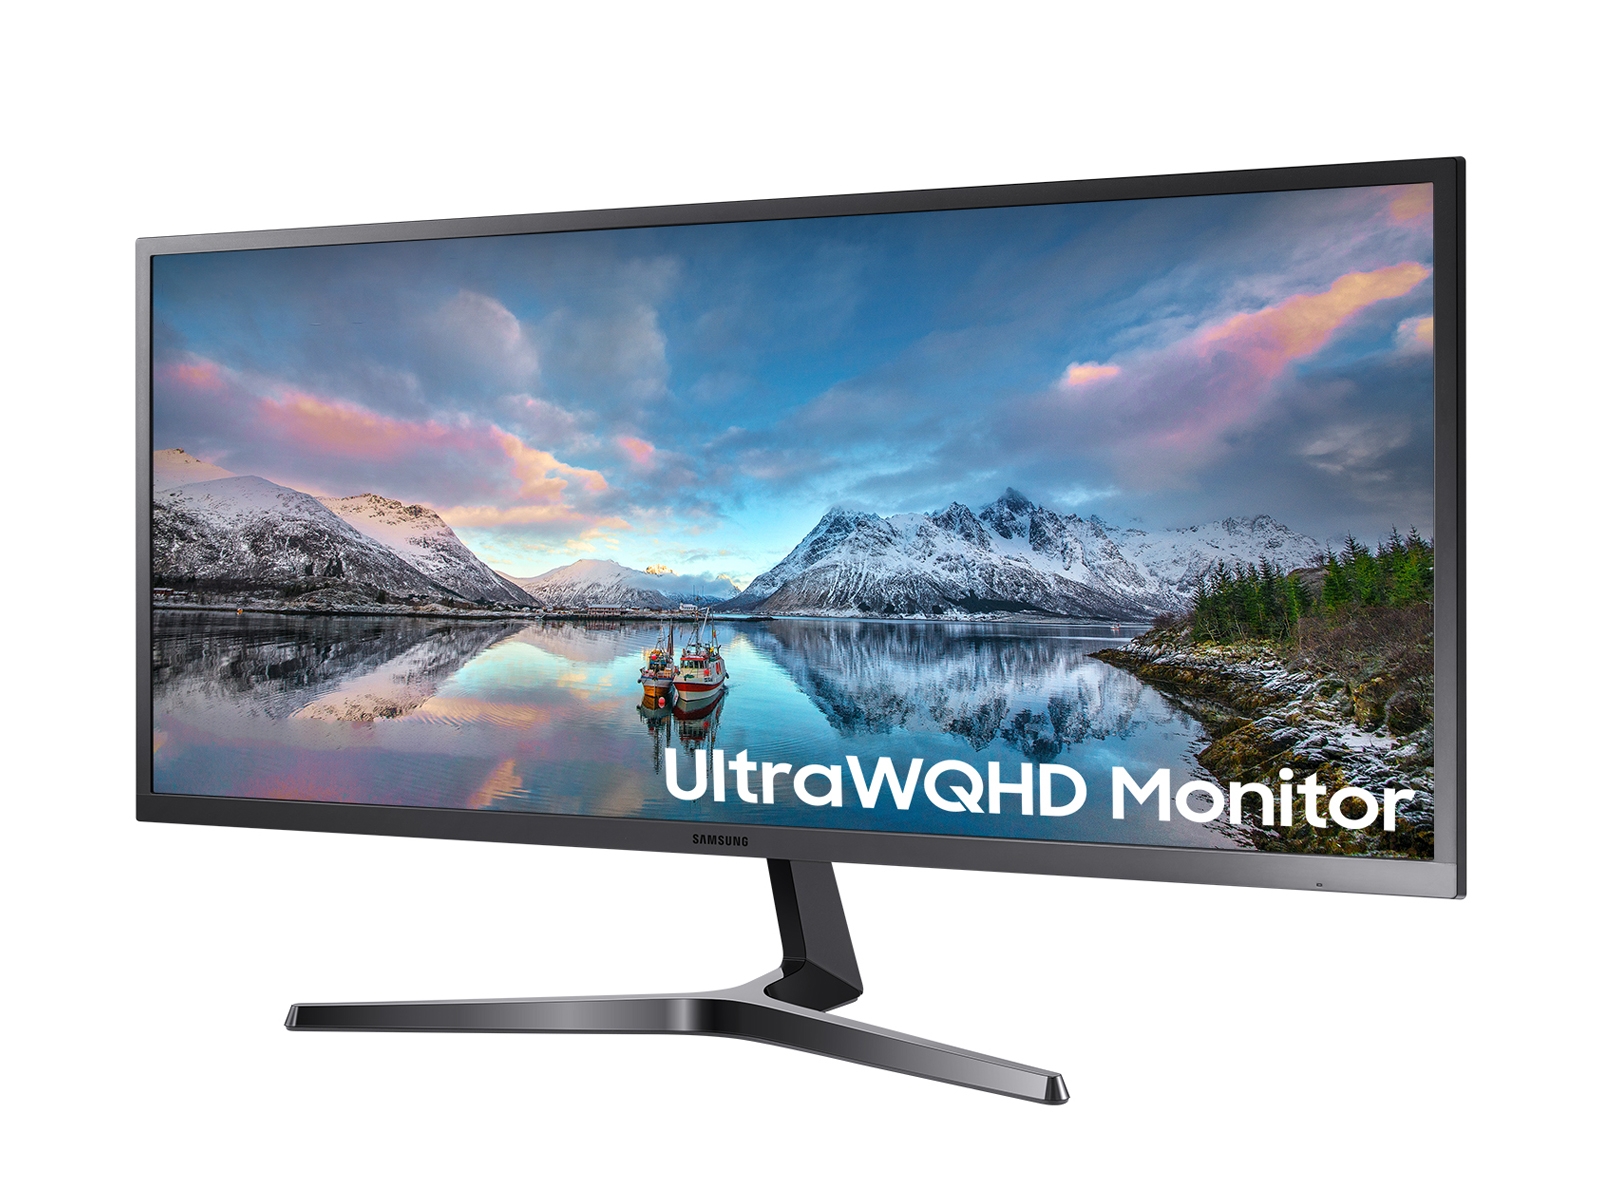  Ultrawide Monitor